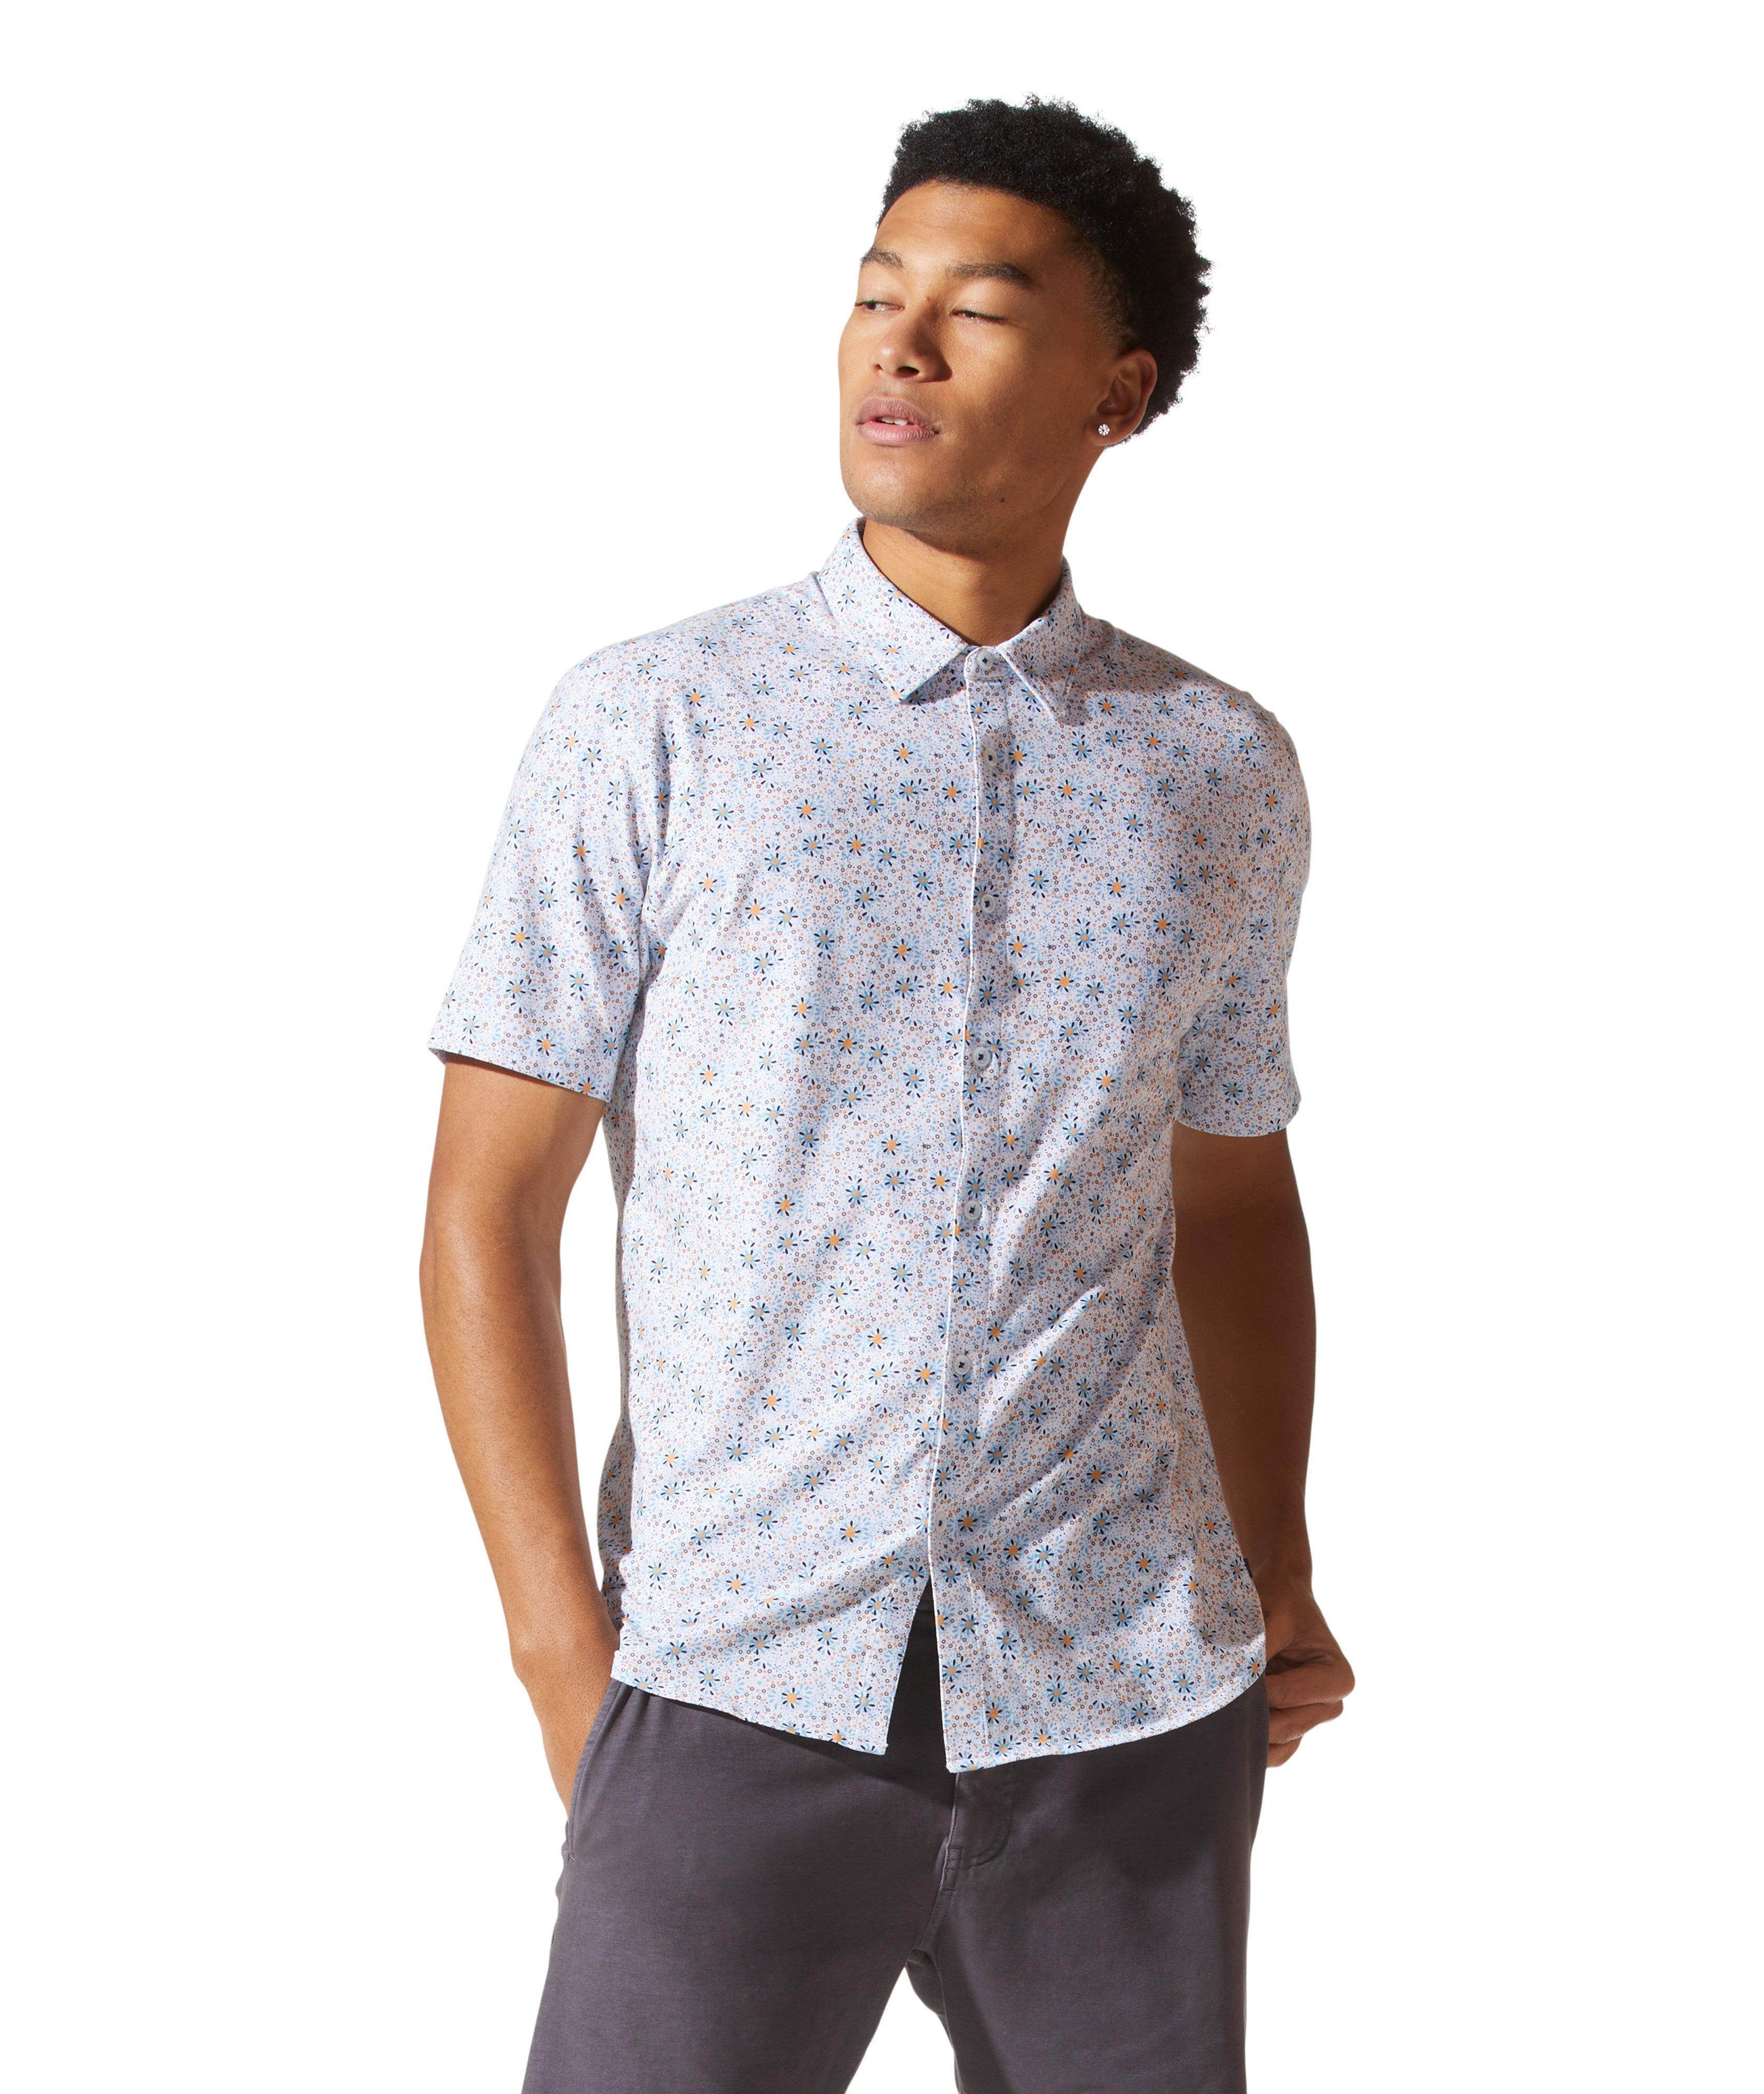 On-Point Short-Sleeve Cotton-Blend Shirt image 0